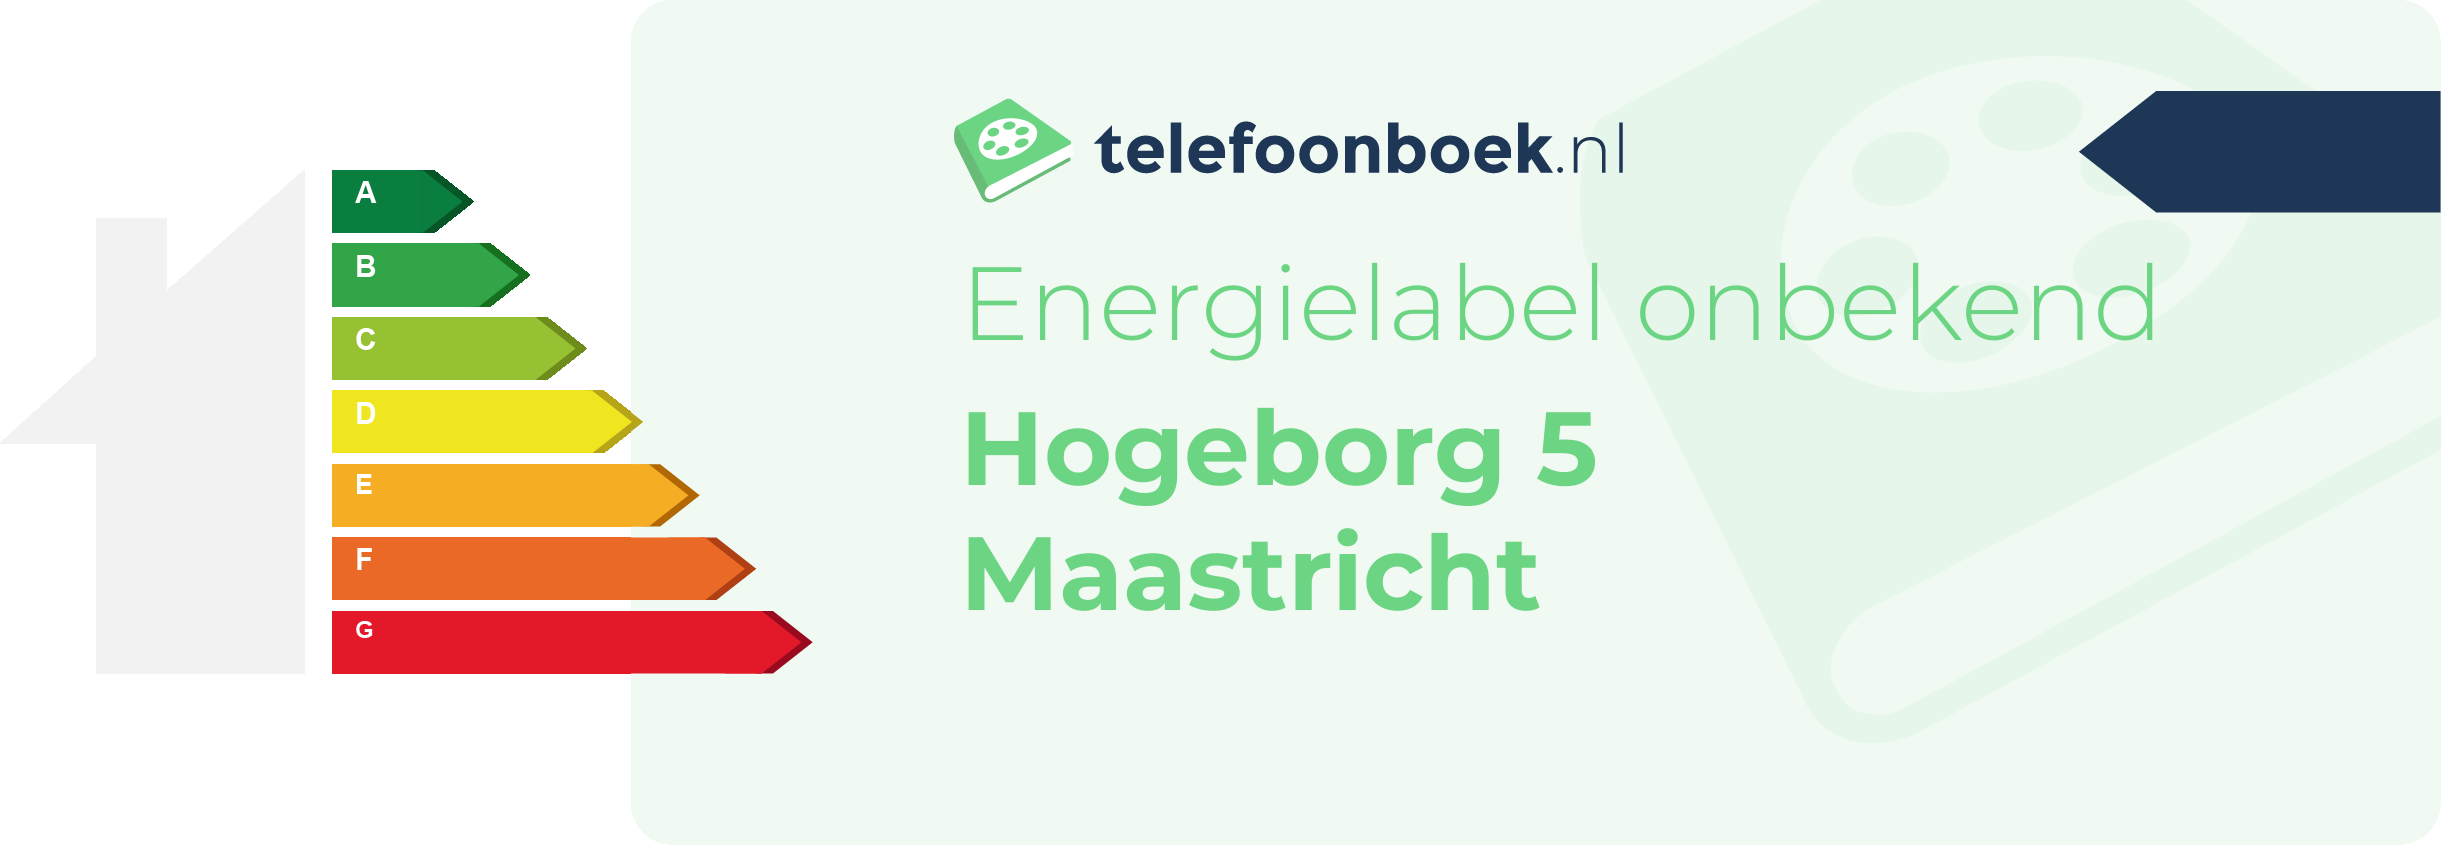 Energielabel Hogeborg 5 Maastricht